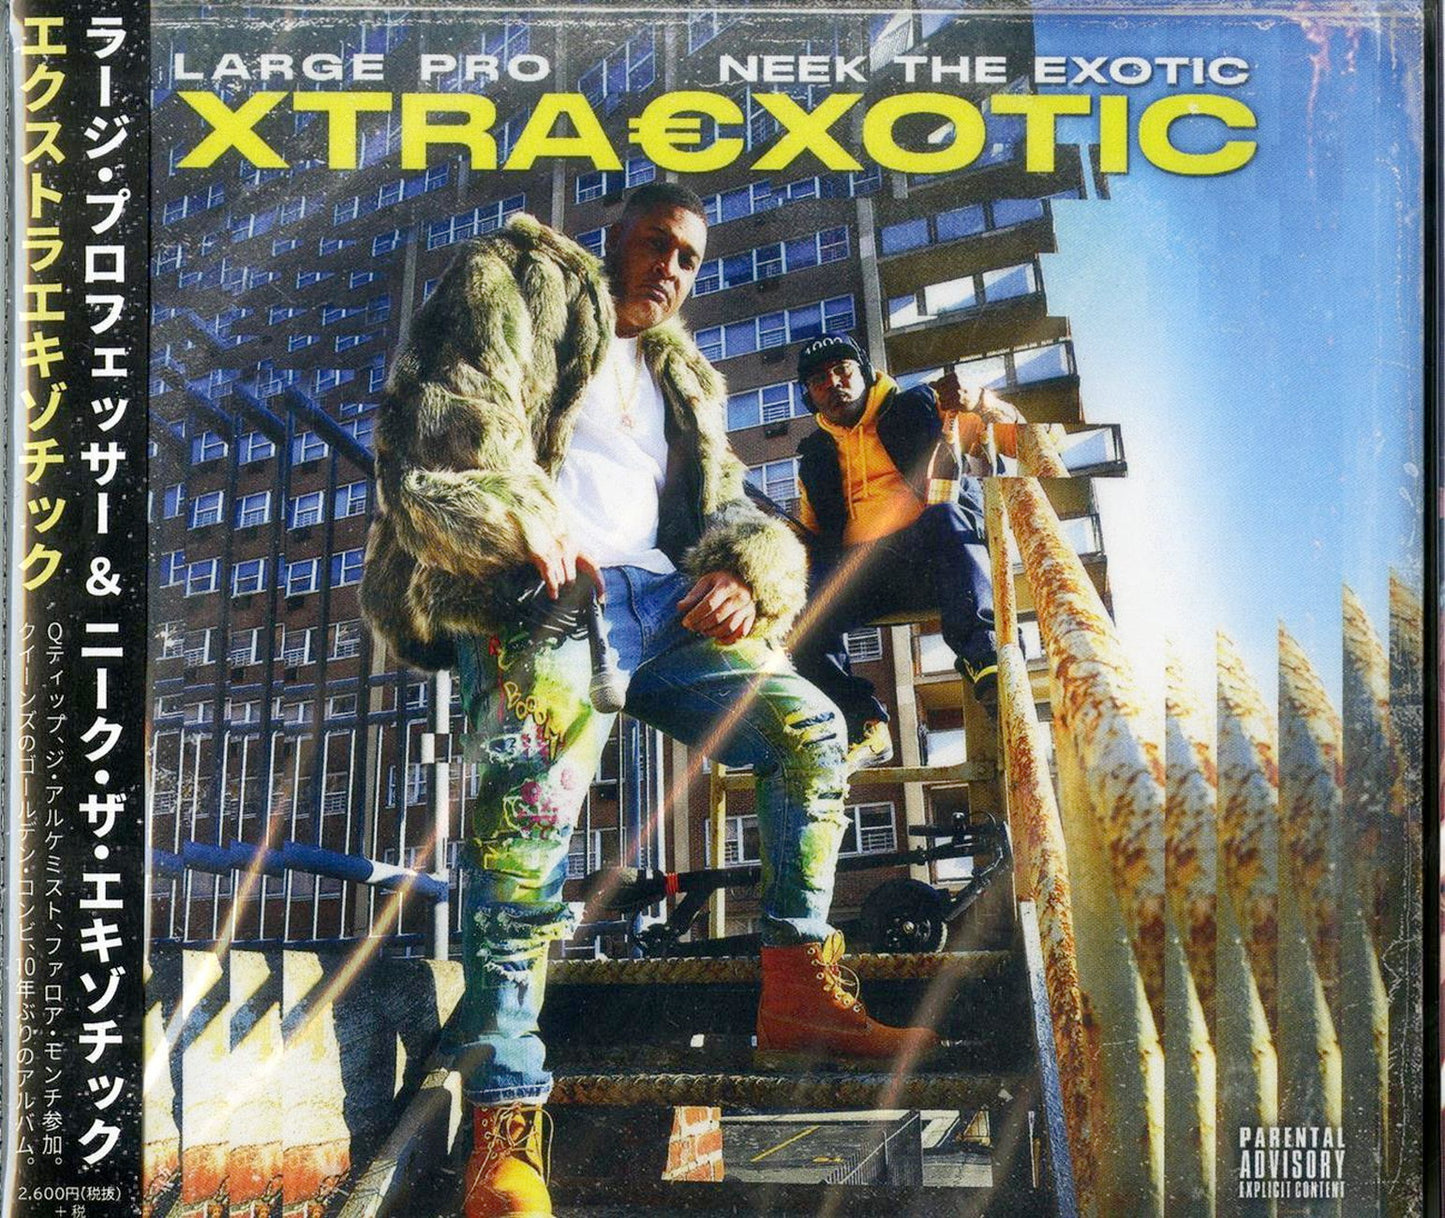 Large Professor & Neek The Exotic - Xtraexotic - Import CD